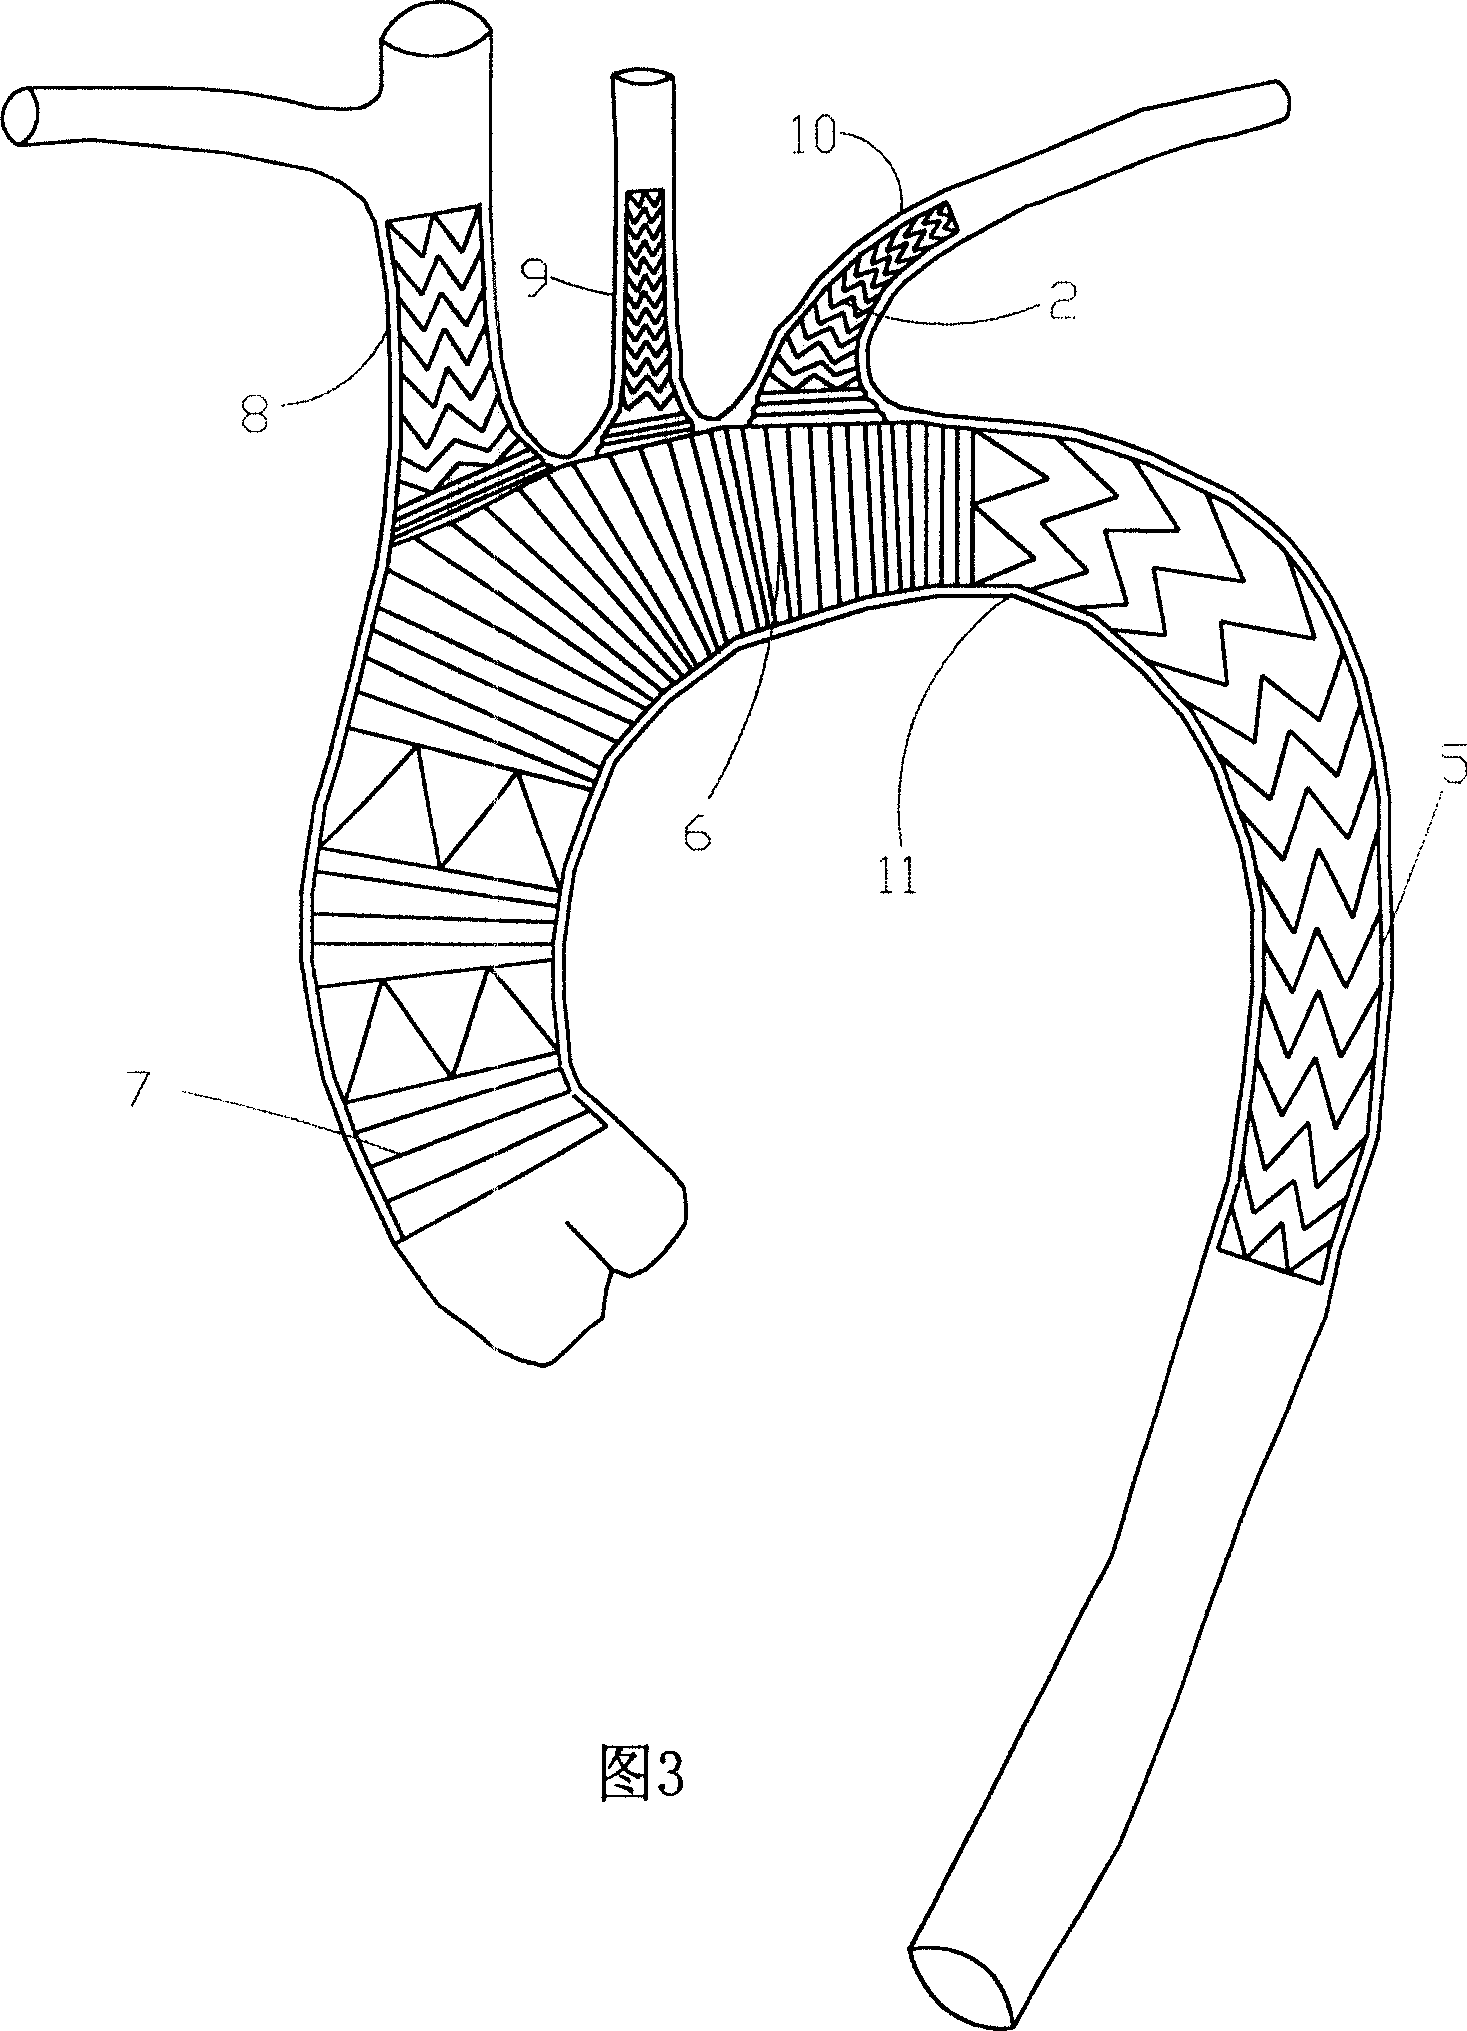 Three-collateral bracket vascellum for arcus aortae